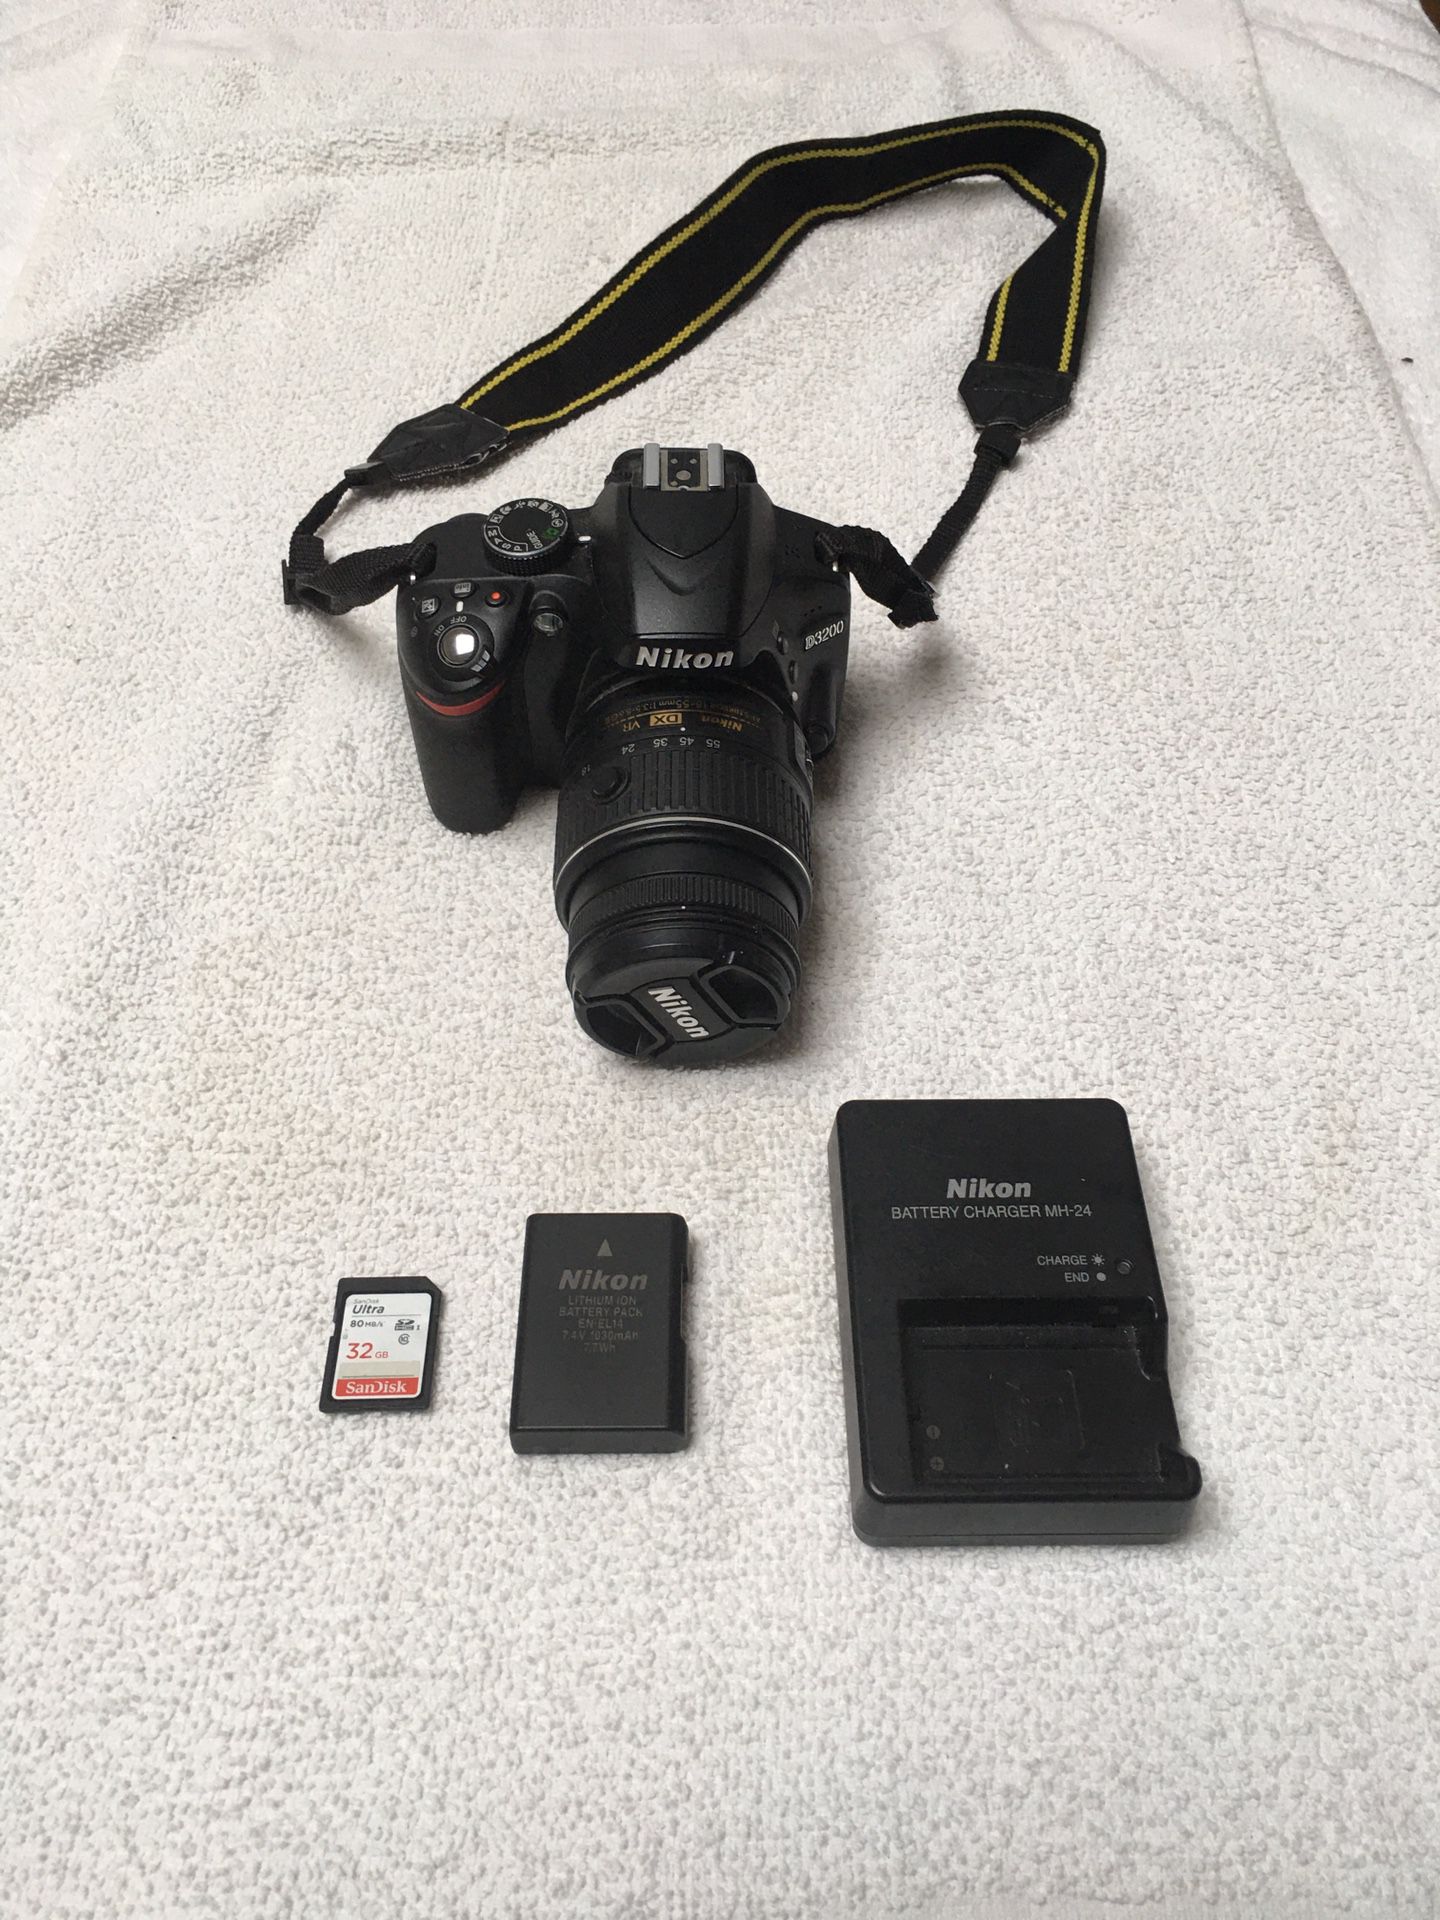 Nikon D3200 Digital SLR Camera With Nikon AF-S DX 18-55mm 1:3.5-5.6G VR II LENS Plus Battery, Charger, and 32GB Card